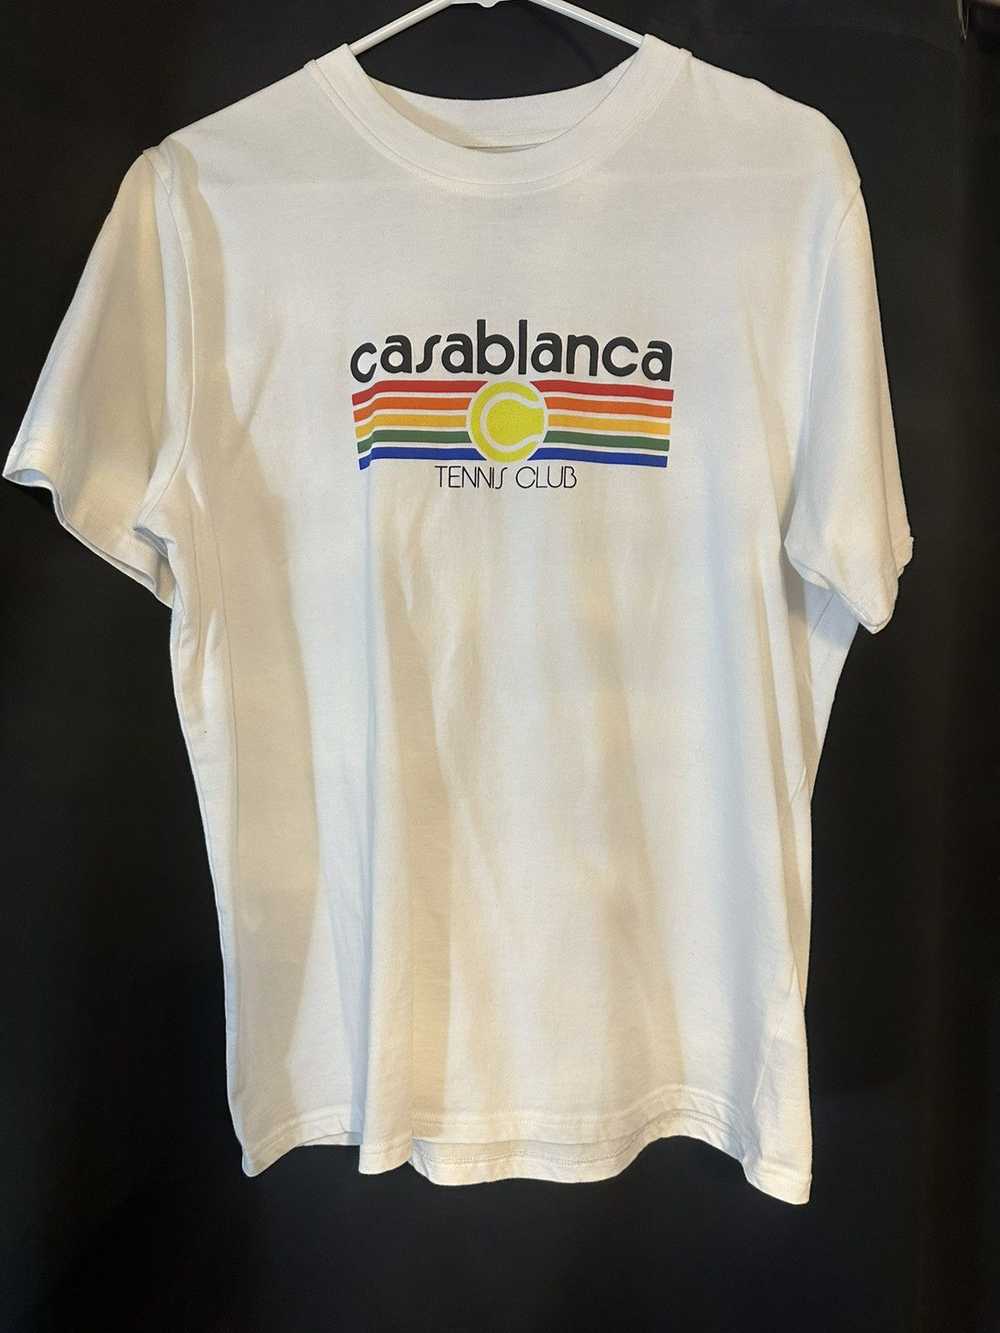 Casablanca Casablanca tennis club t shirt - image 1